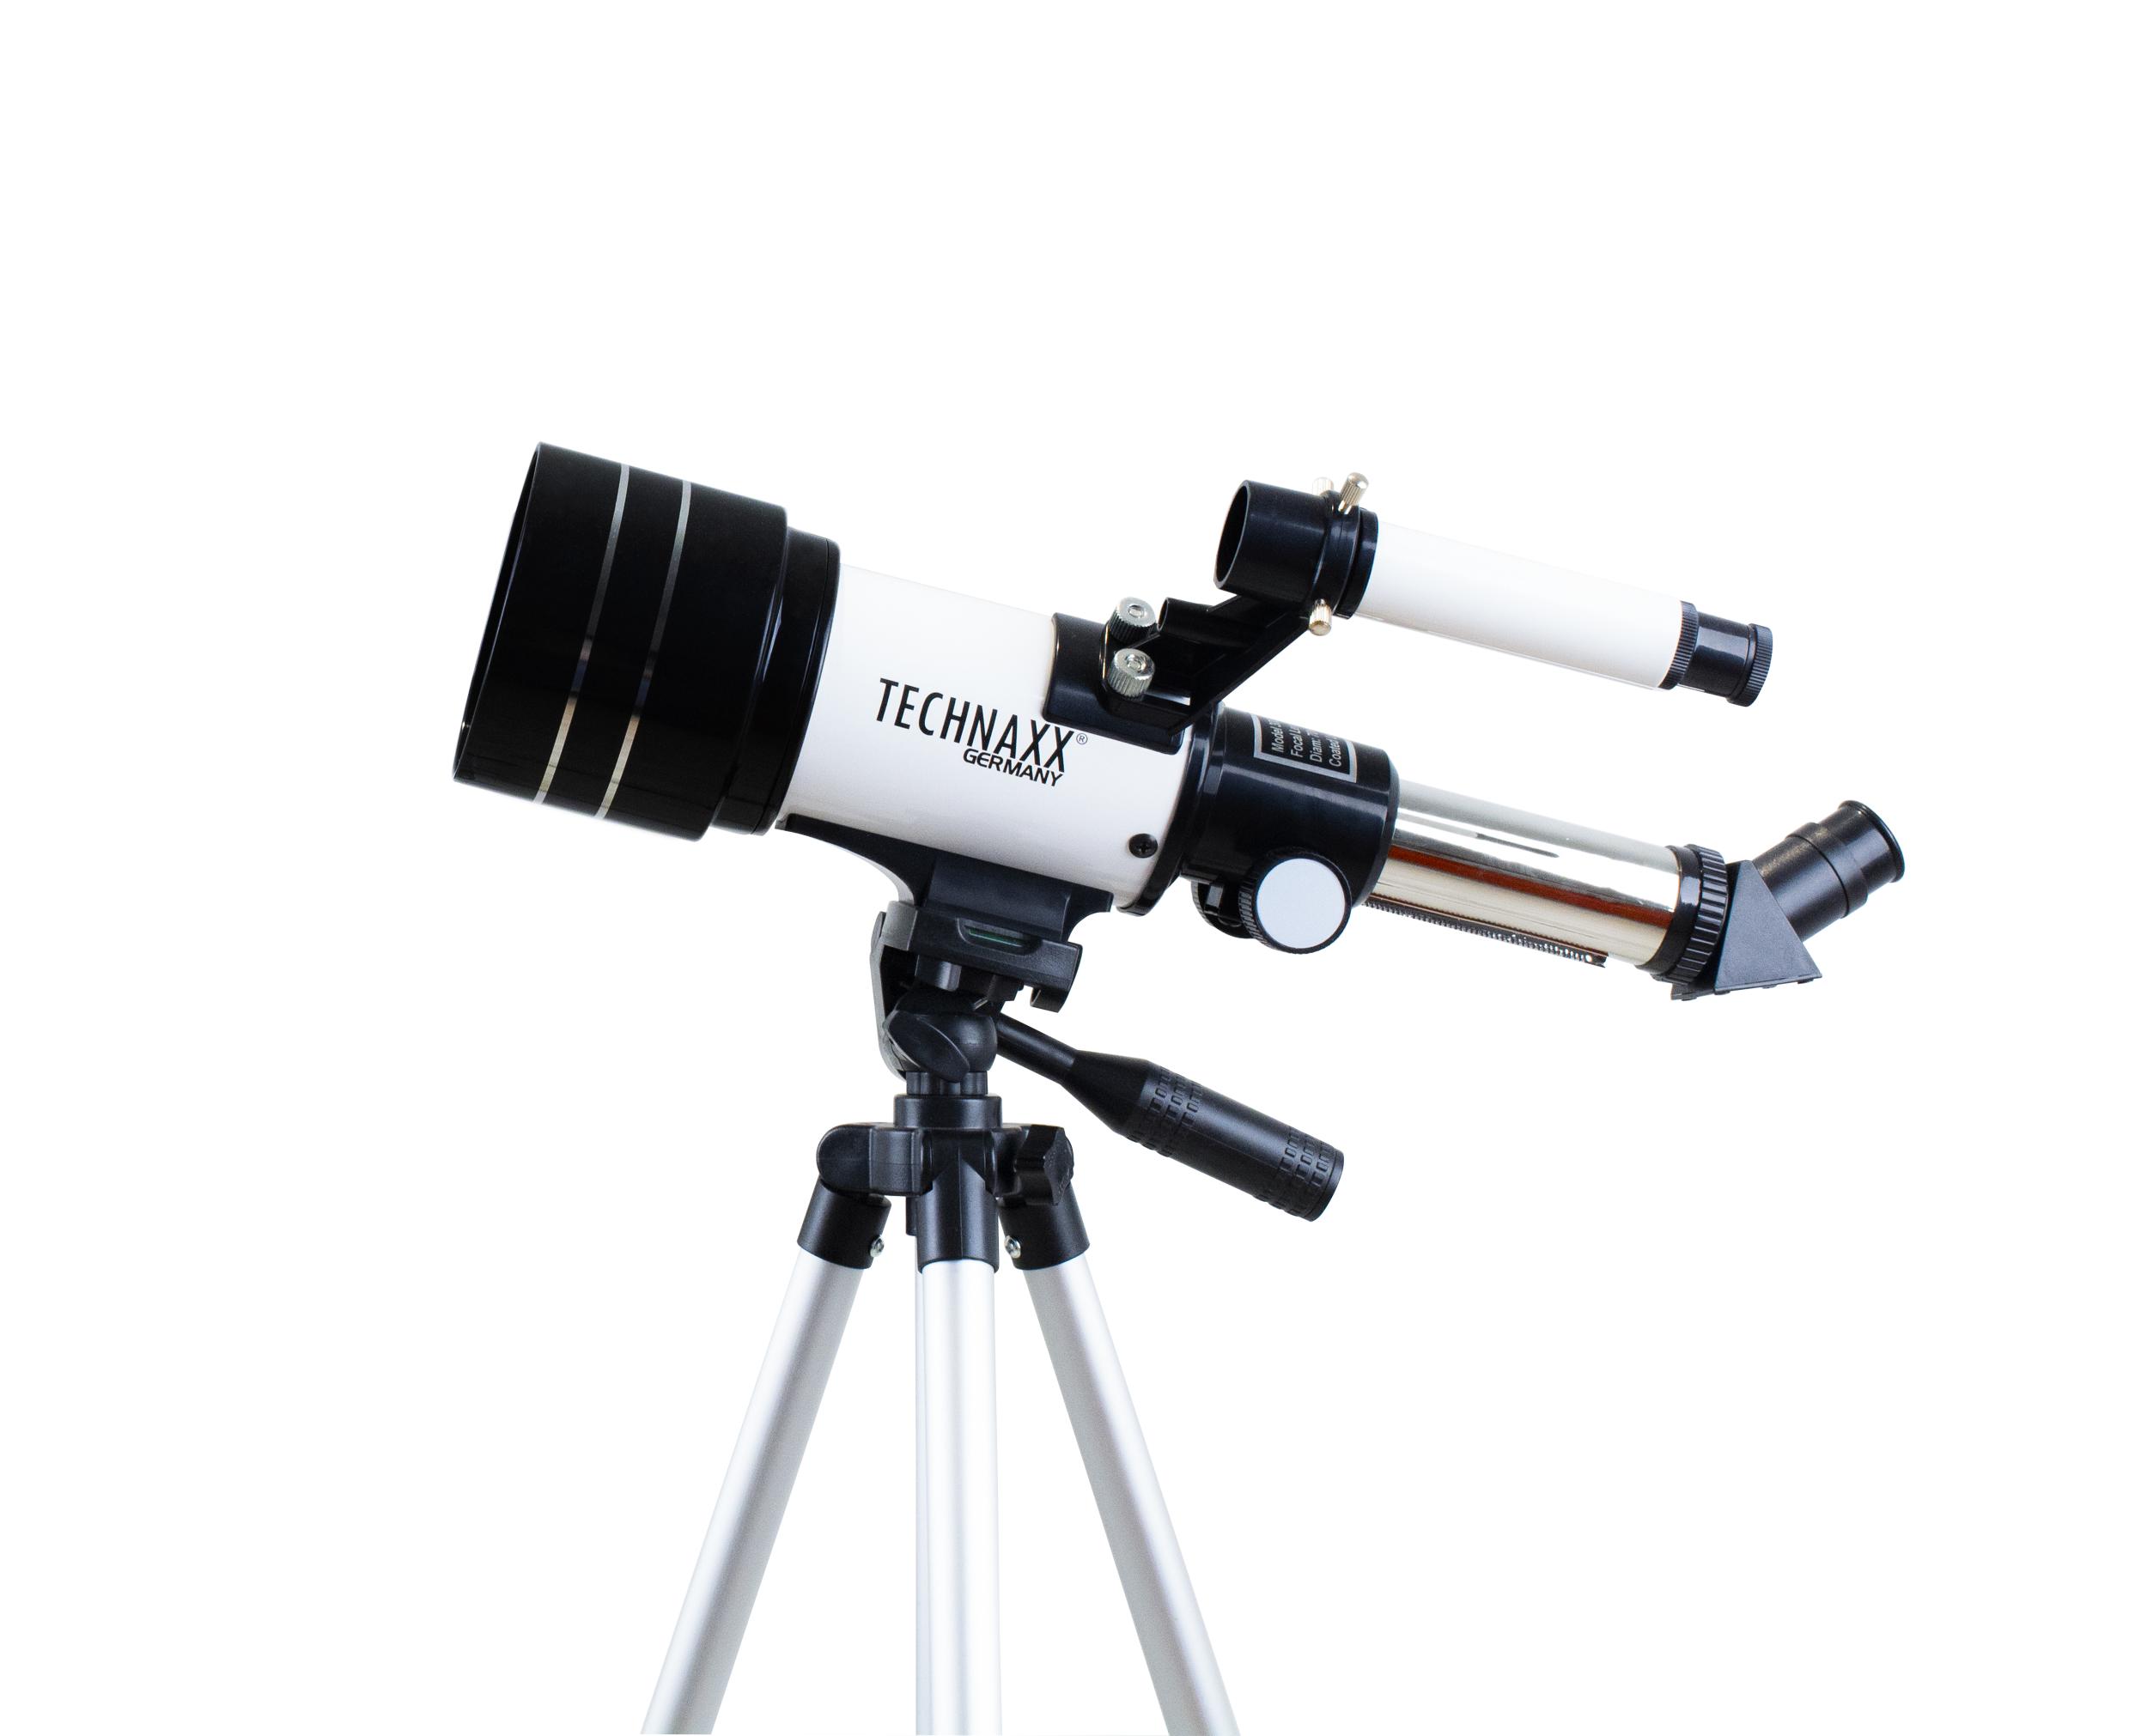 Technaxx Teleskop 70/300 zur Landschafts- und Himmelsbeobachtung